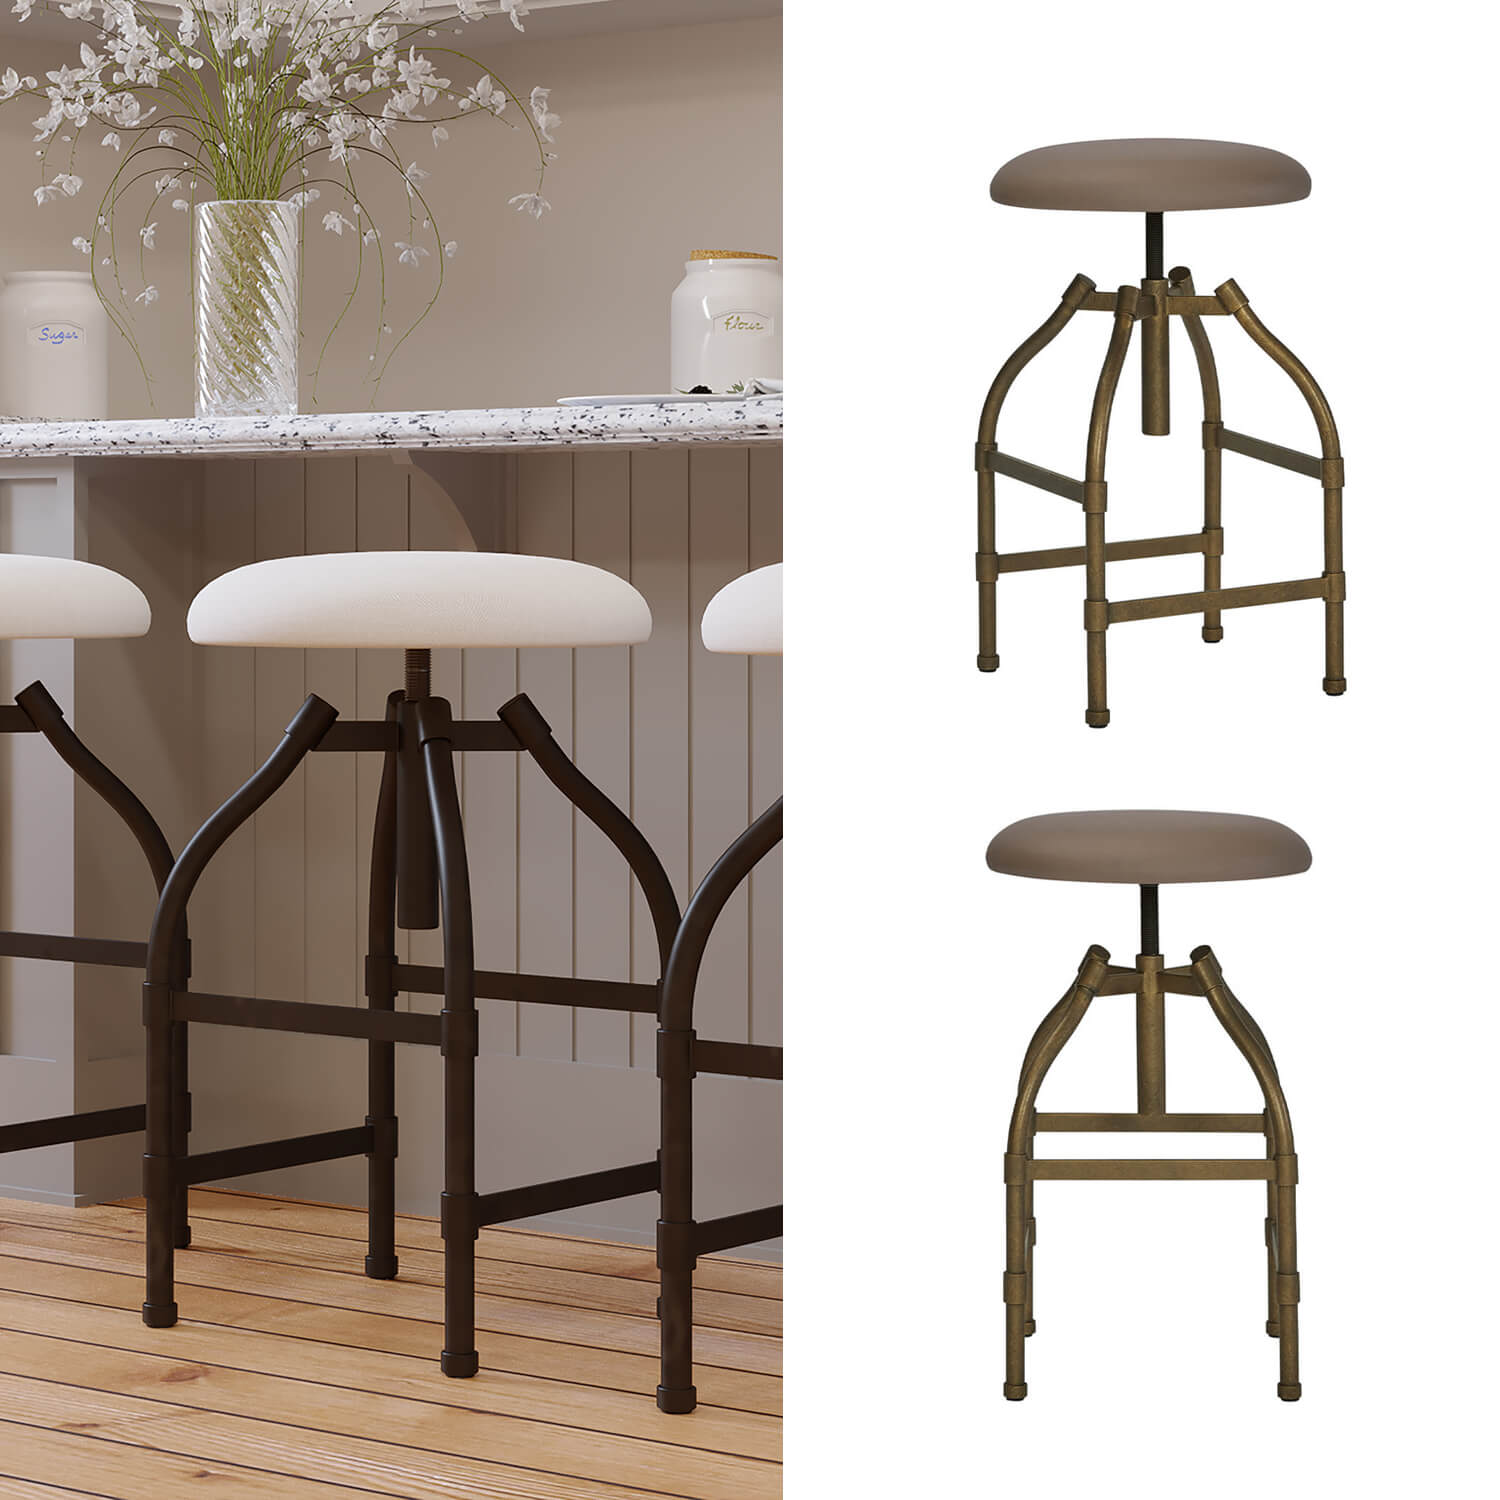 https://barstoolcomforts.com/wp-content/uploads/2016/05/wesley-allen-dodge-backless-industrial-bar-stool-custom-color-choices.jpg